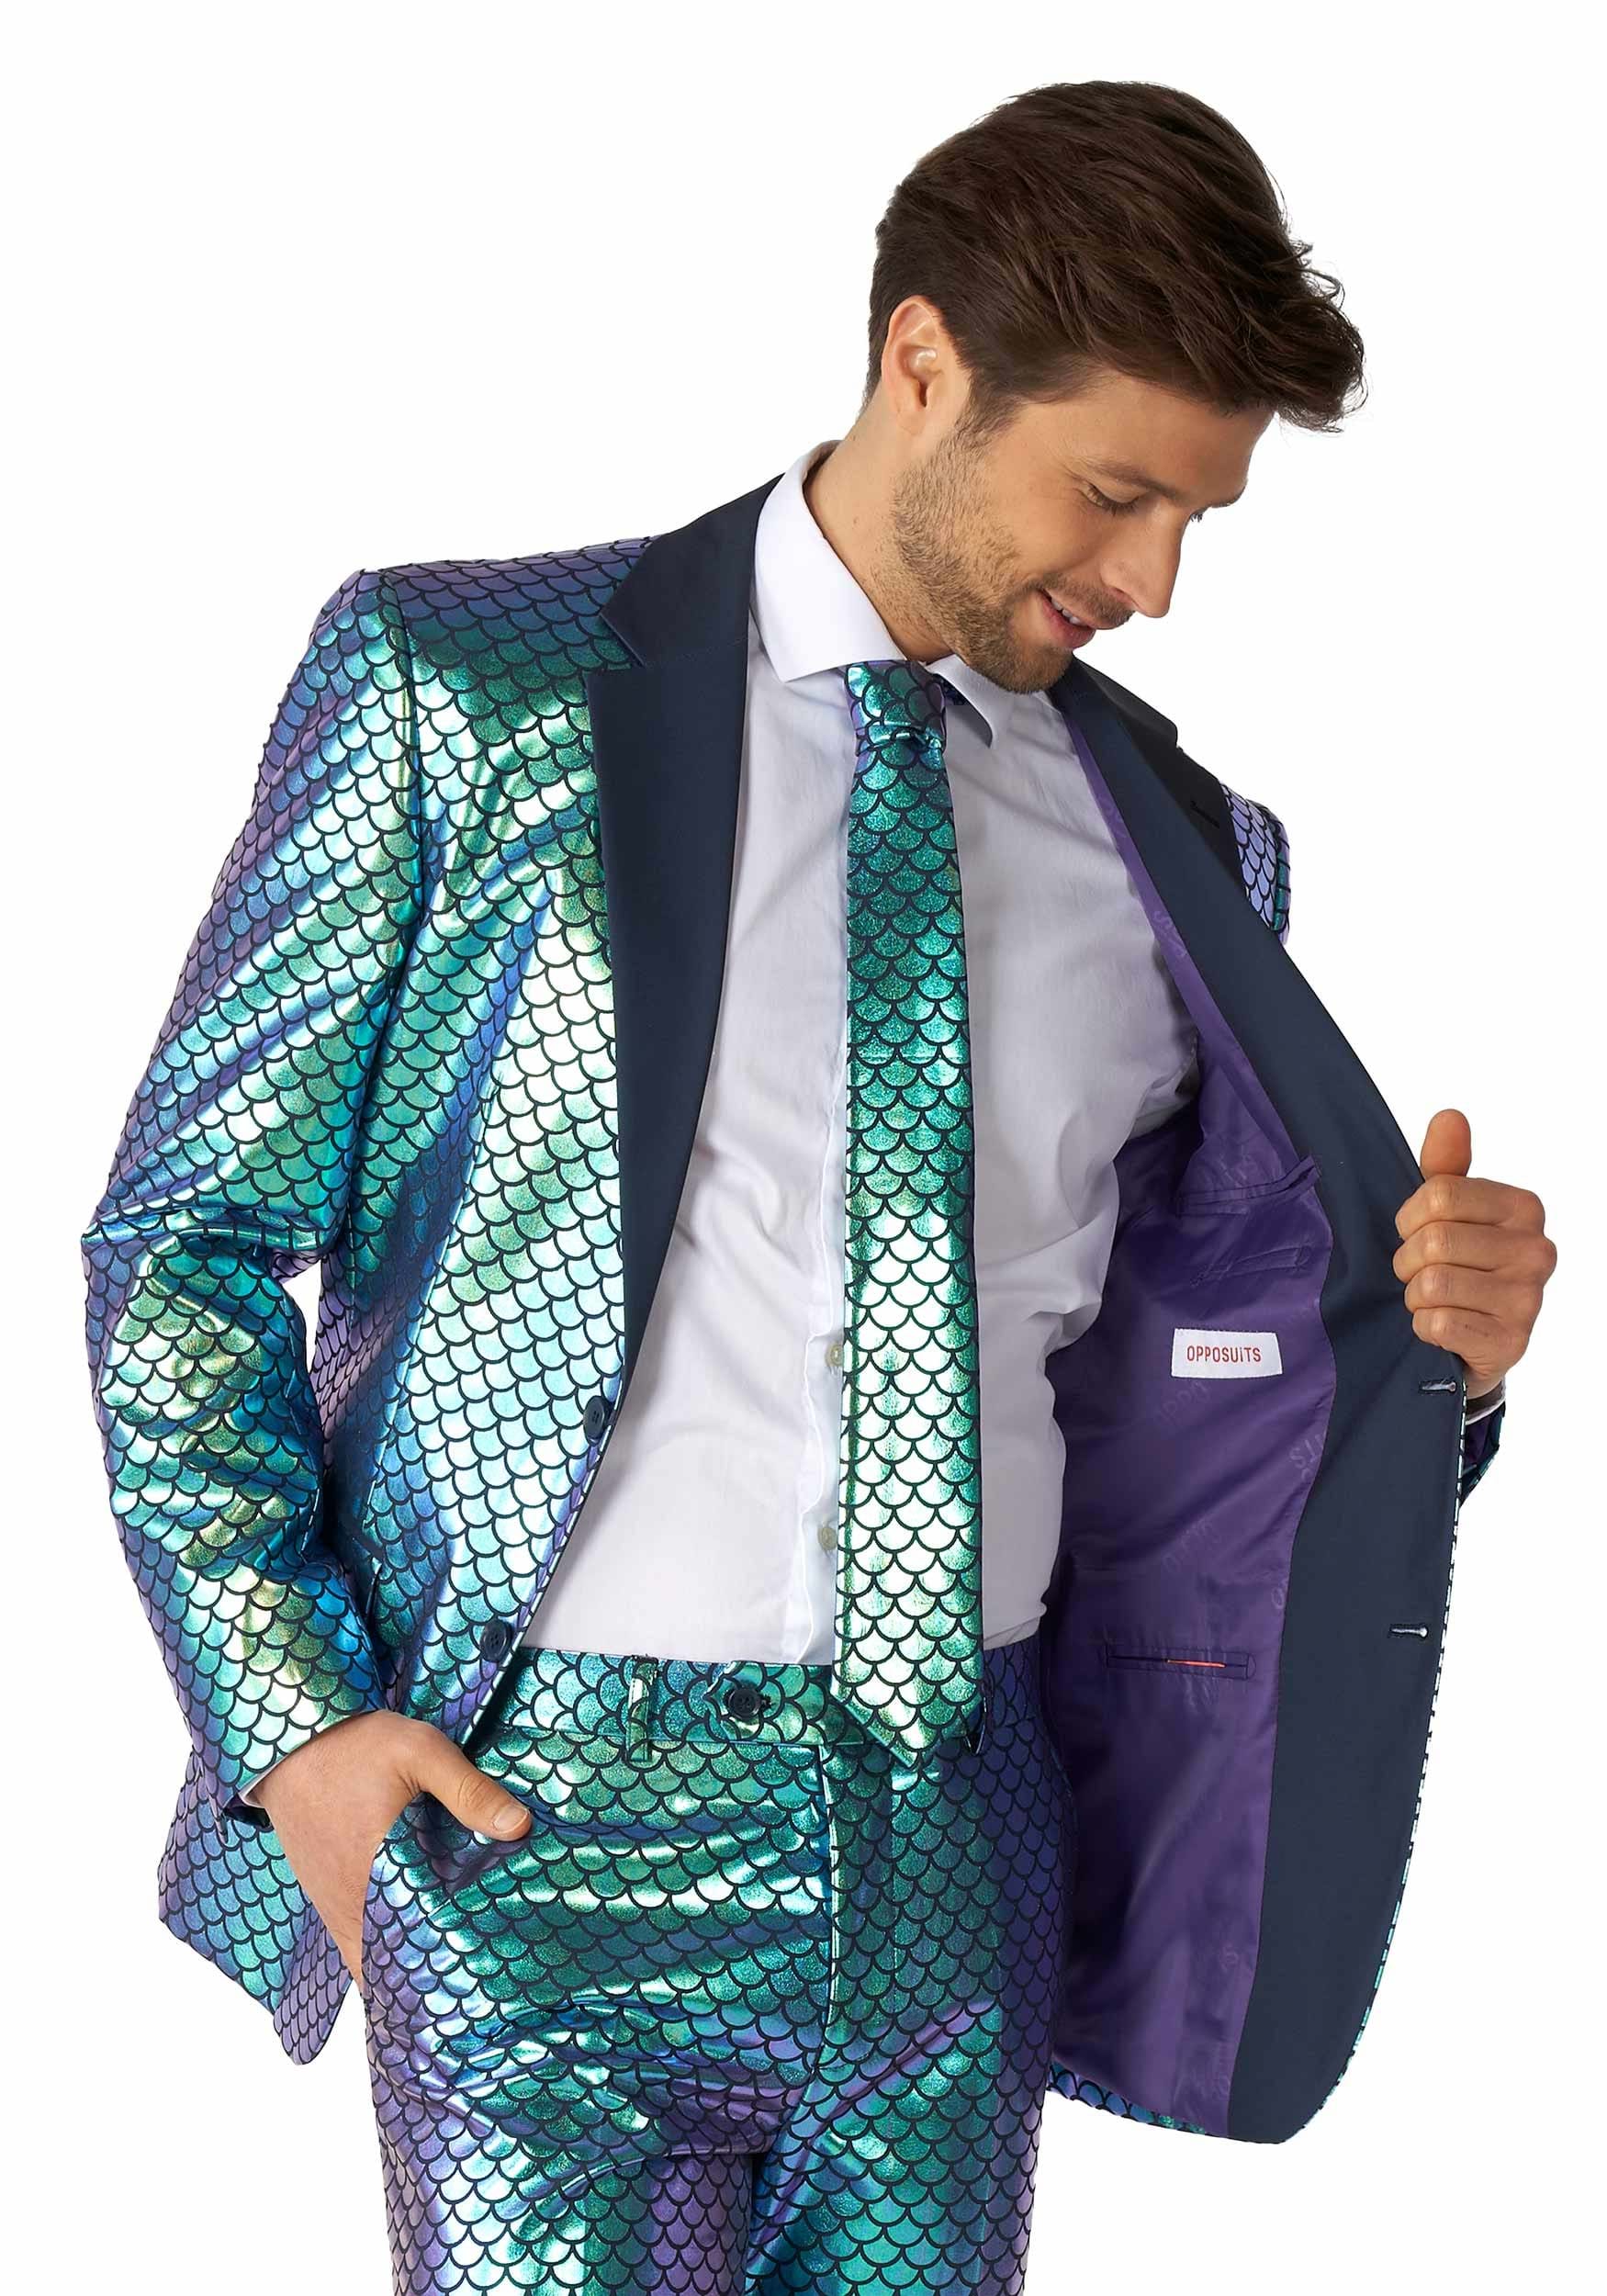 https://images.halloweencostumes.com/products/73640/2-1-175500/opposuits-fancy-fish-suit-for-men-alt-3.jpg